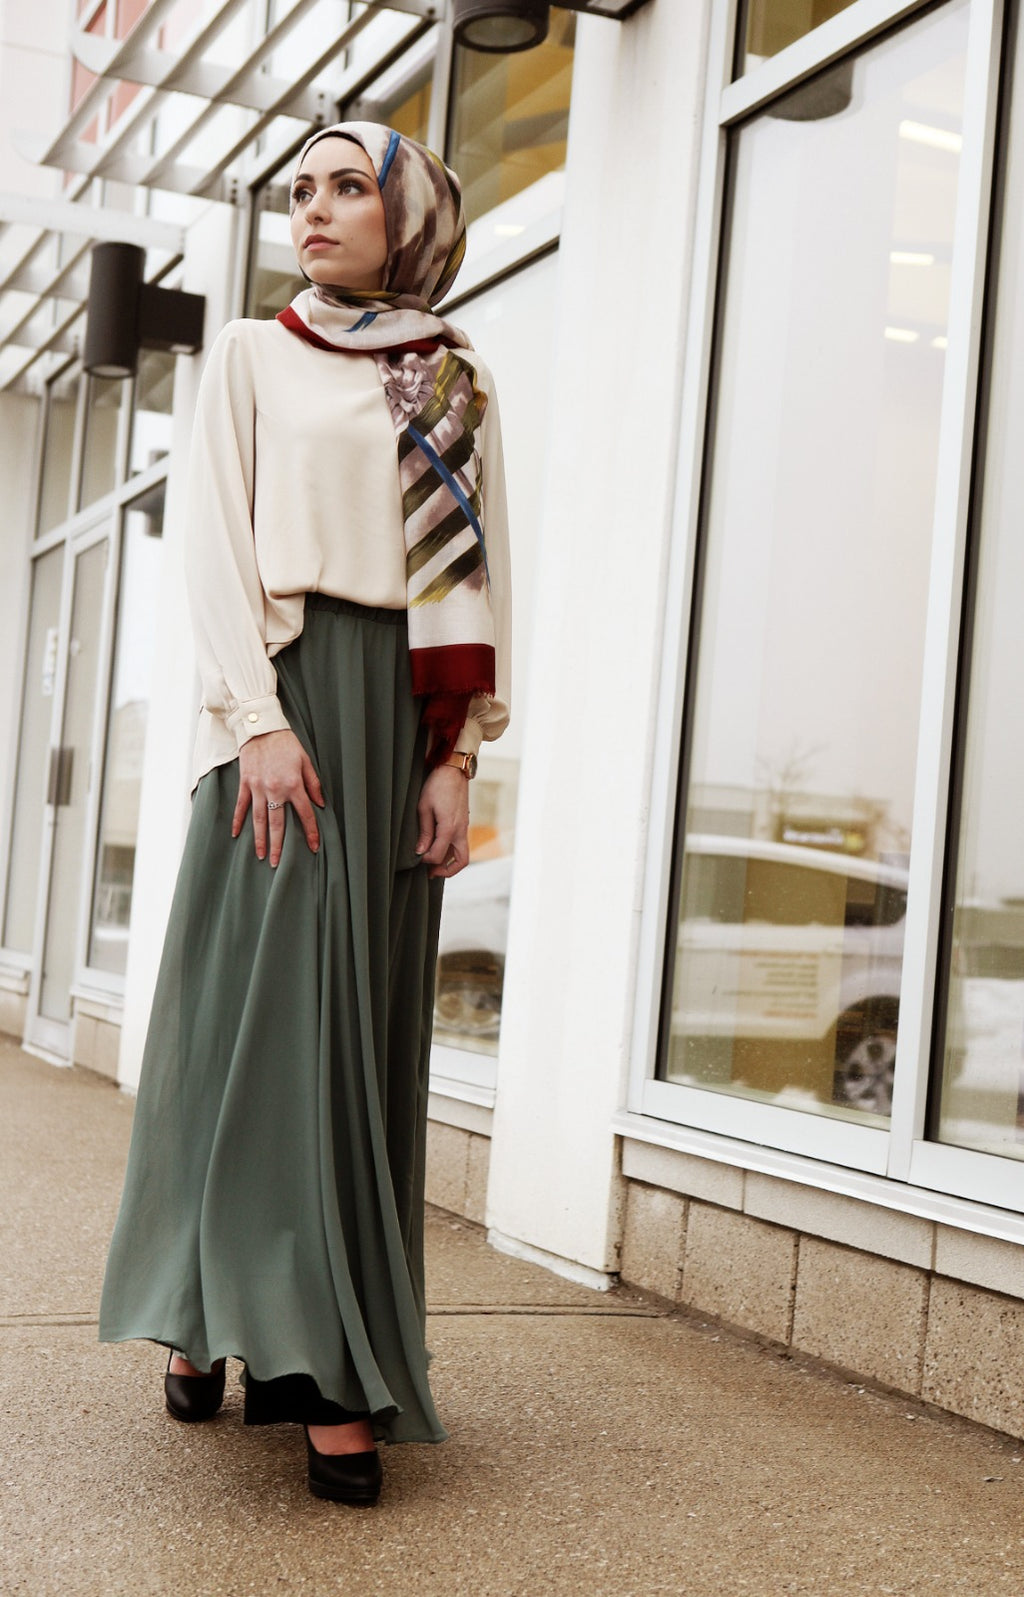 Kcocoo Womens Solid Pleated Elegant Midi Elastic Waist Maxi Skirt Chiffon  Pink XL 